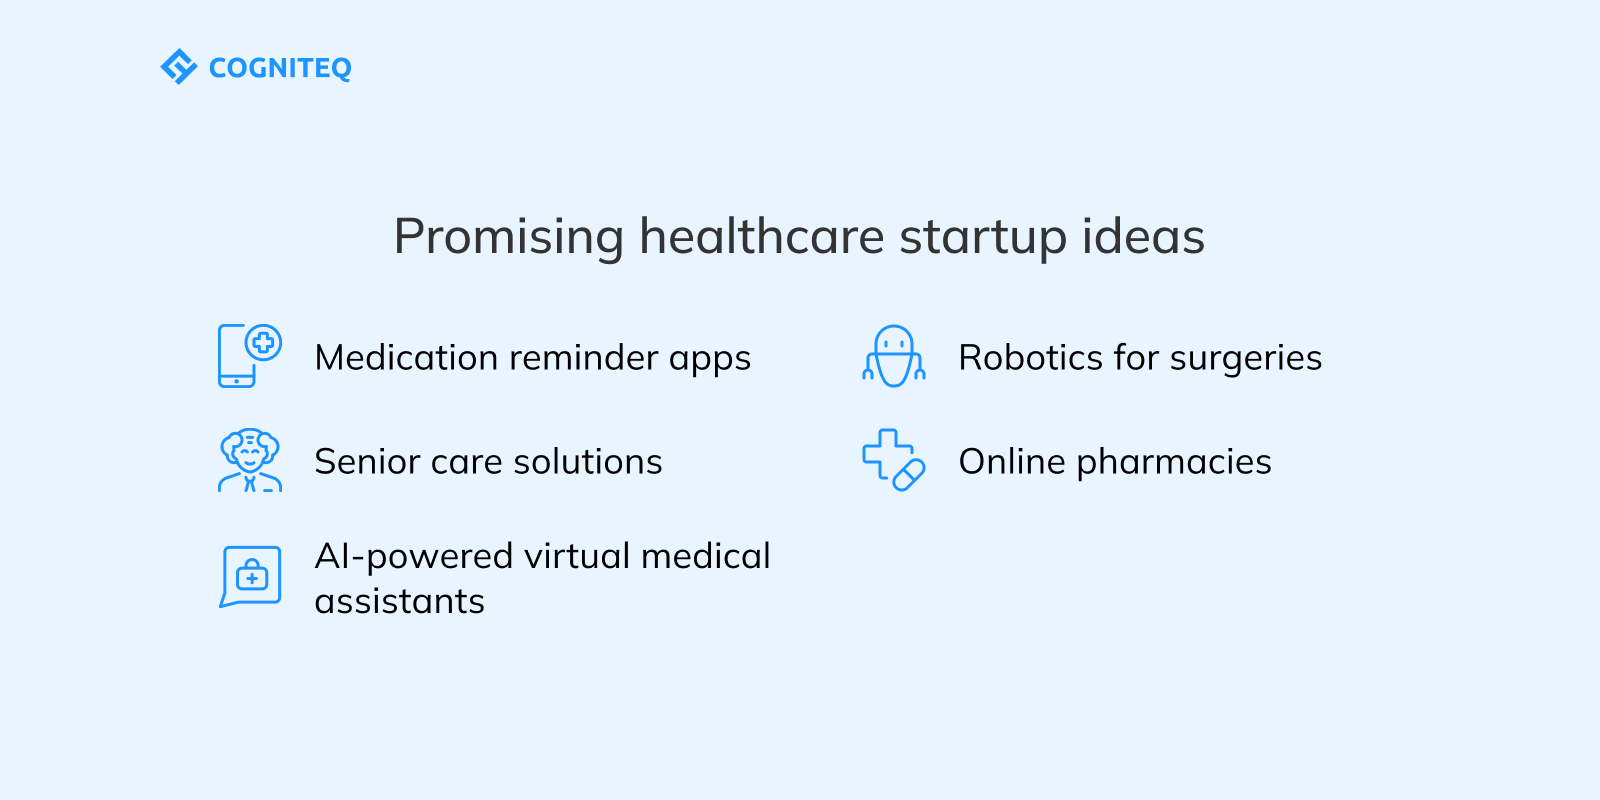 Promising healthcare startup ideas